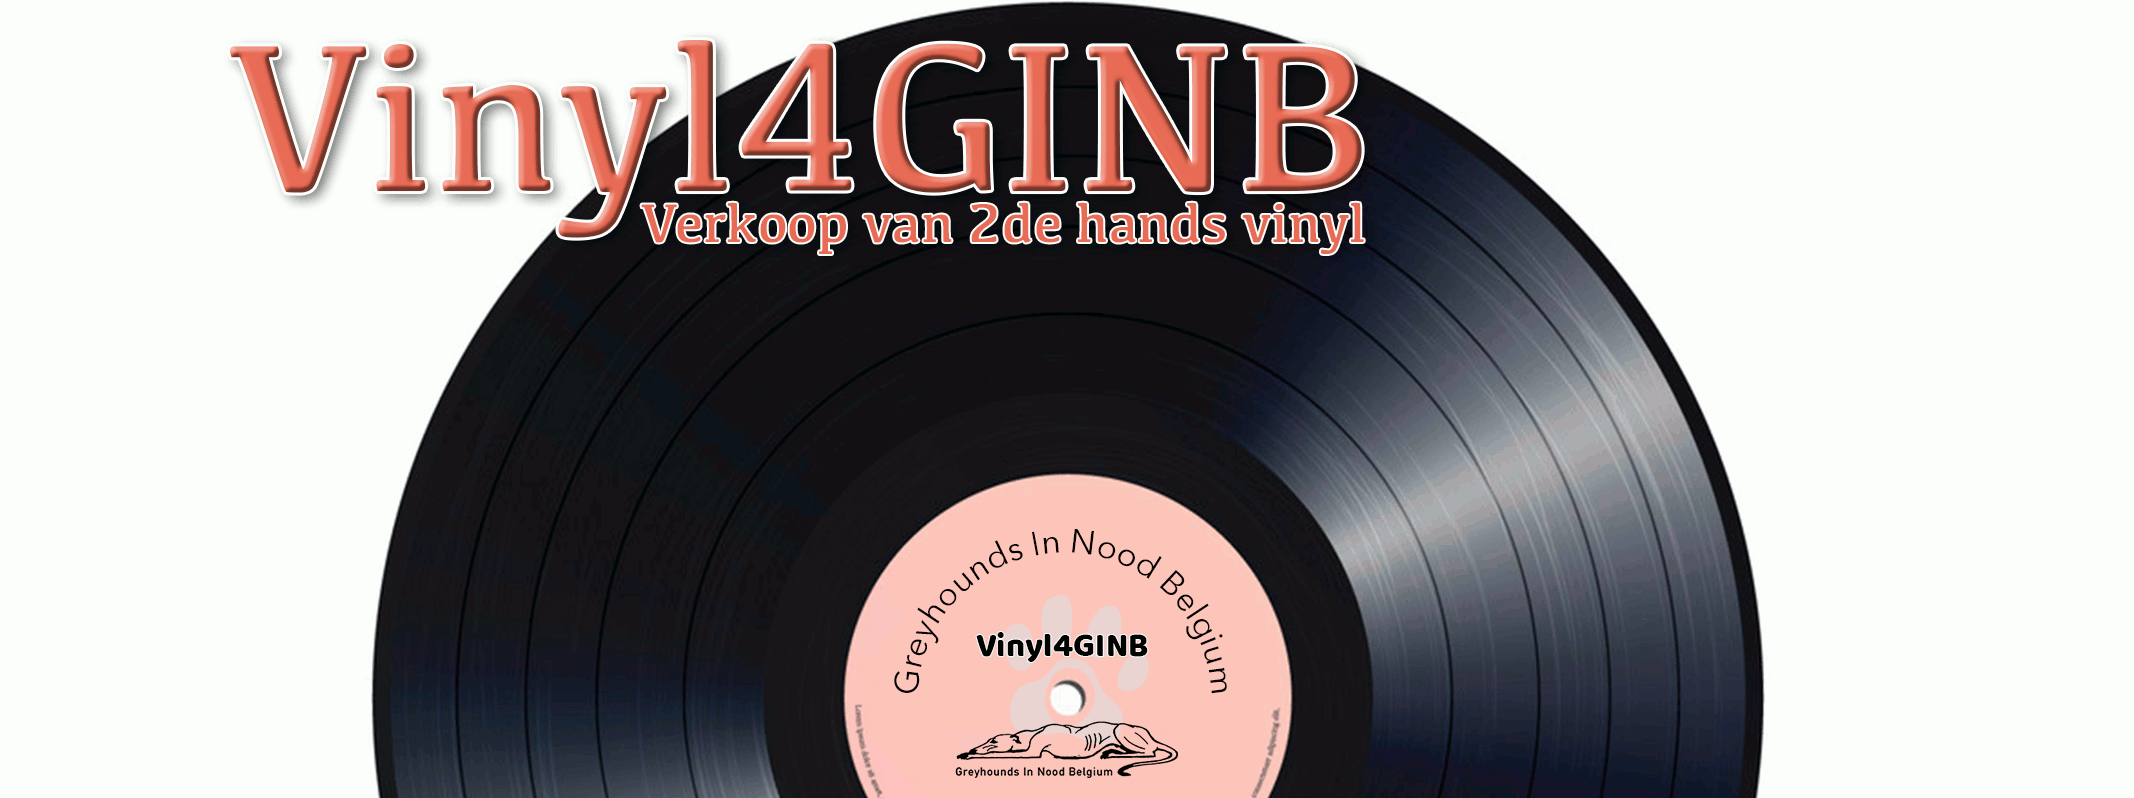 Vinyl4GINB